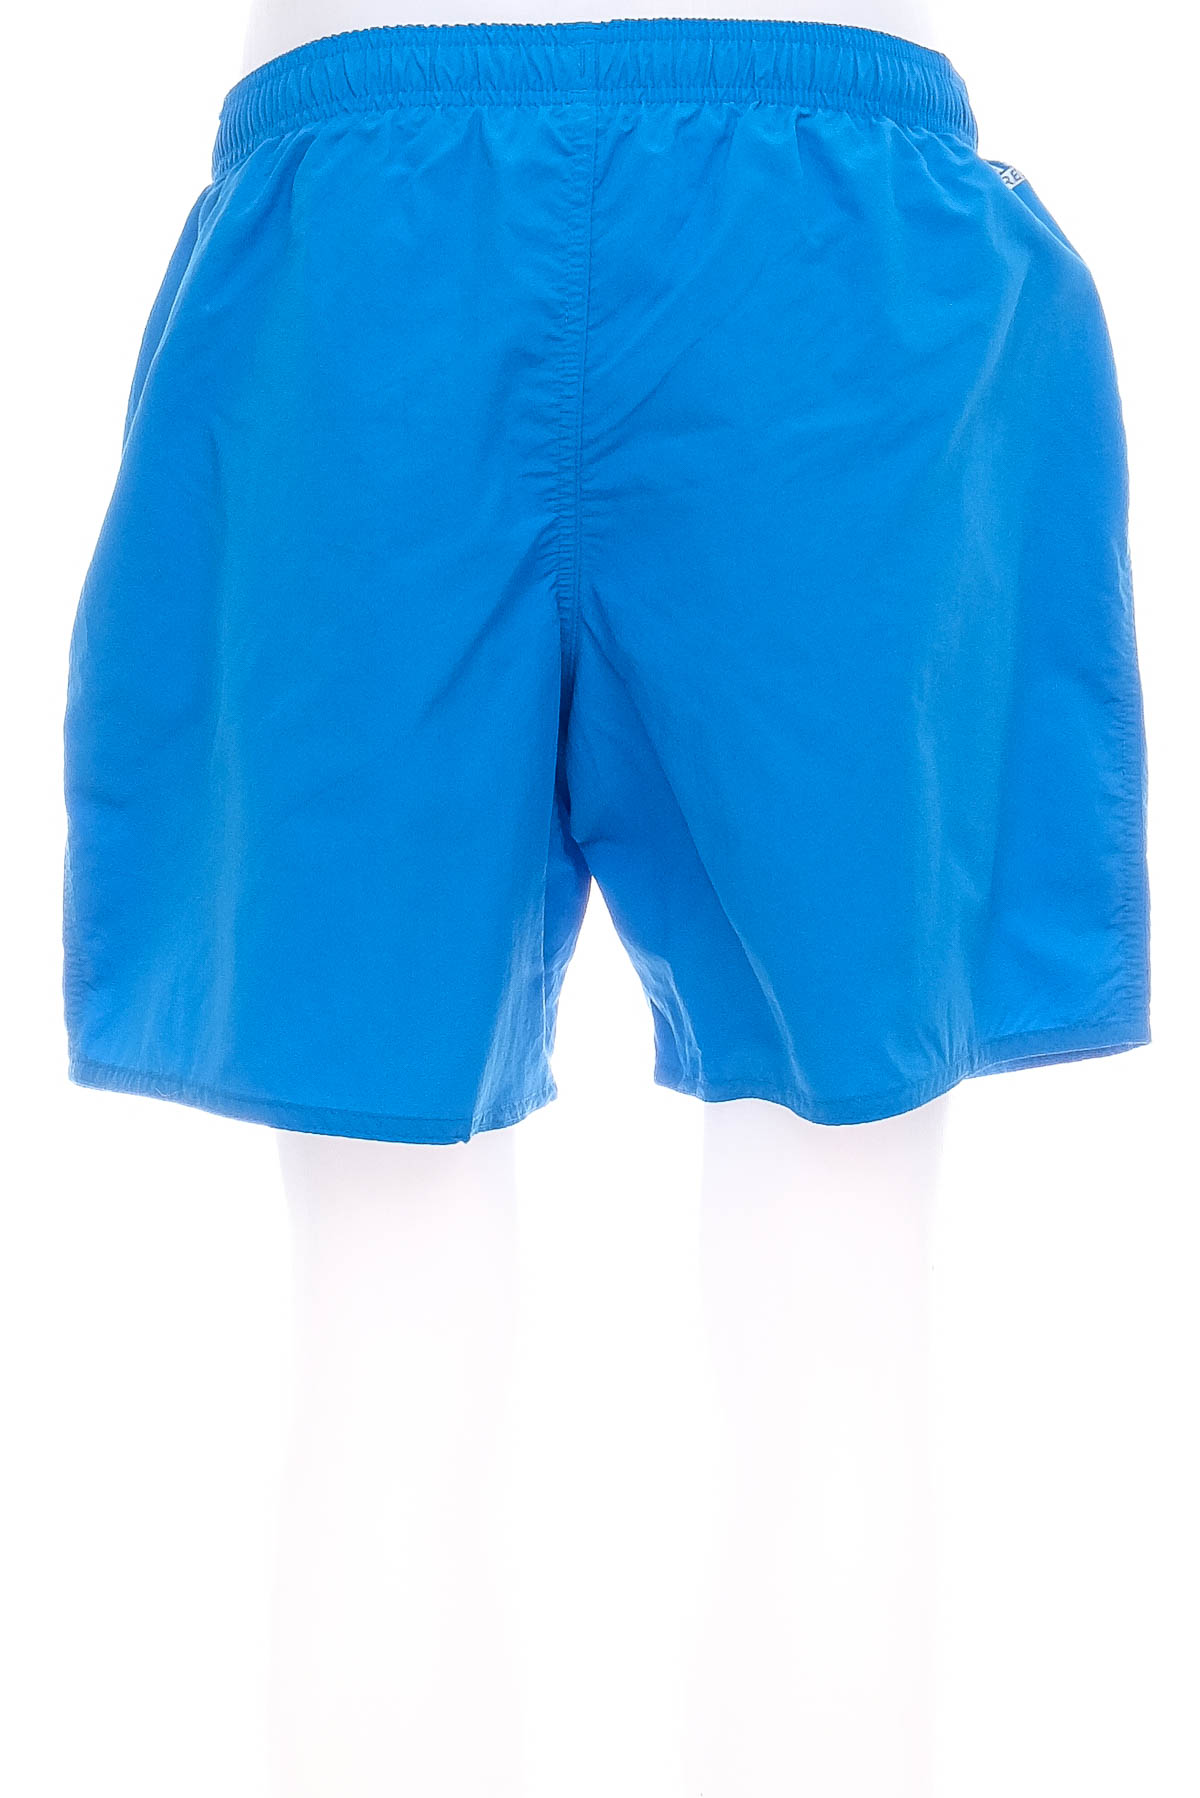 Men's shorts - Nabaiji - 1